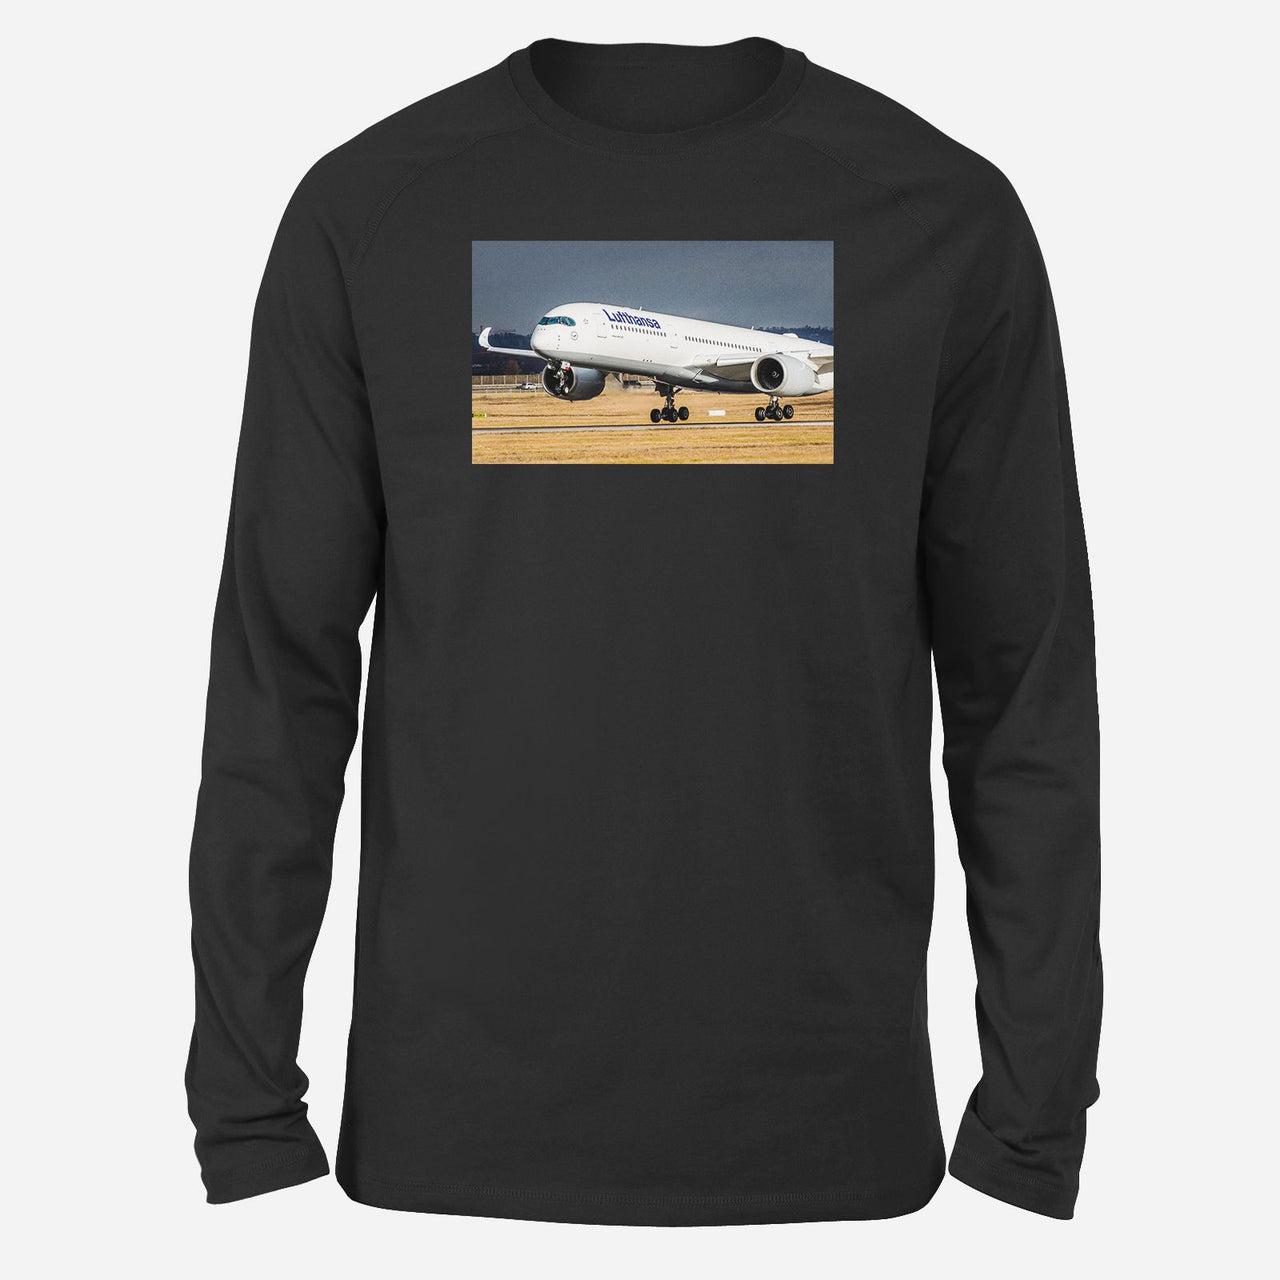 Lutfhansa A350 Designed Long-Sleeve T-Shirts